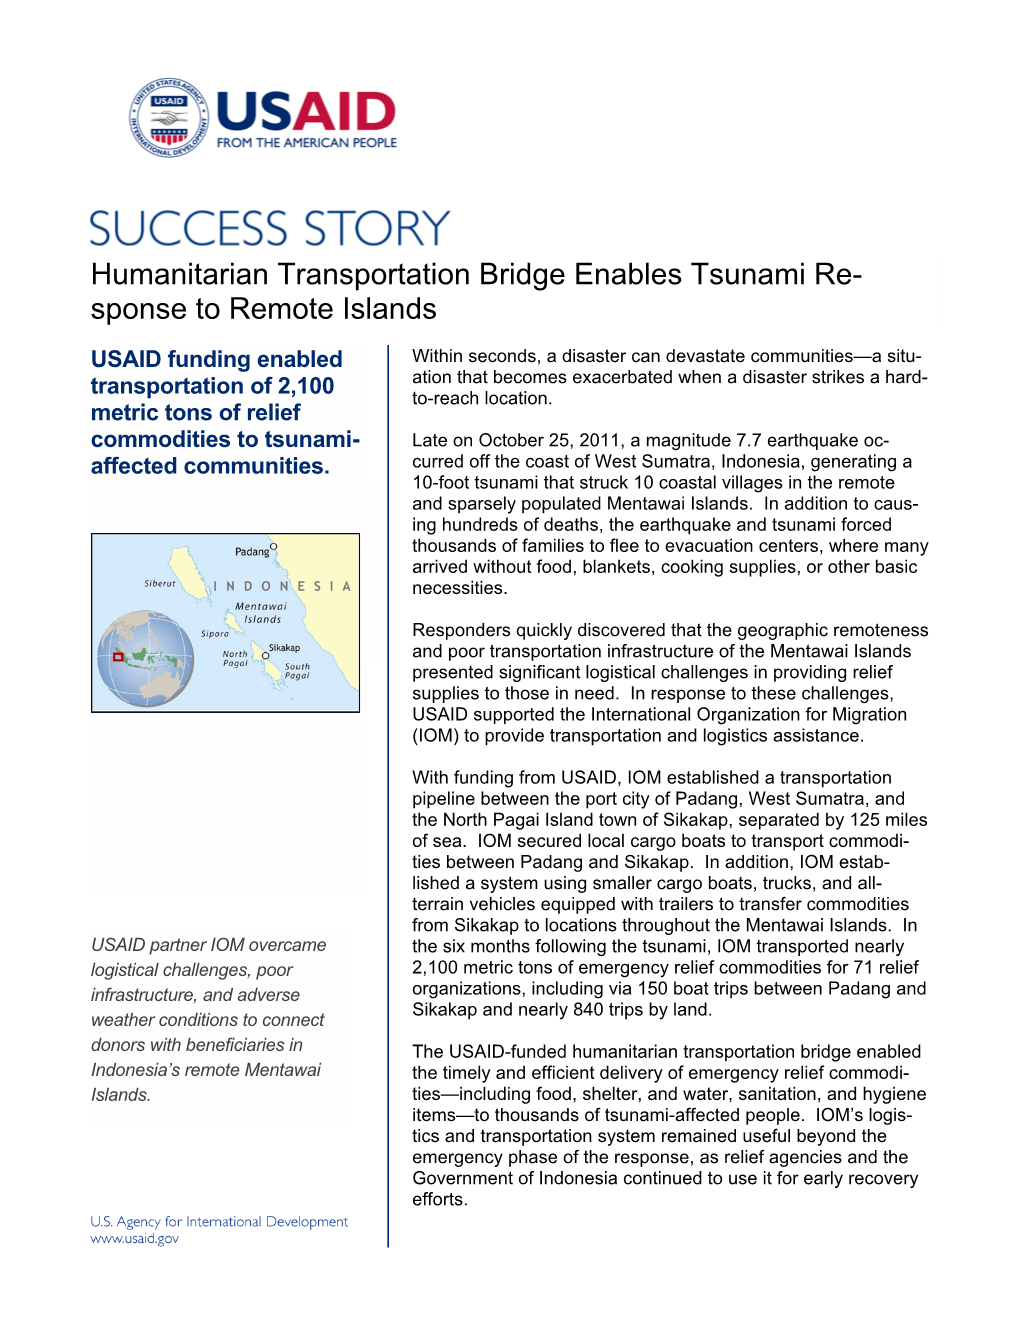 Humanitarian Transportation Bridge Enables Tsunami Re- Sponse to Remote Islands